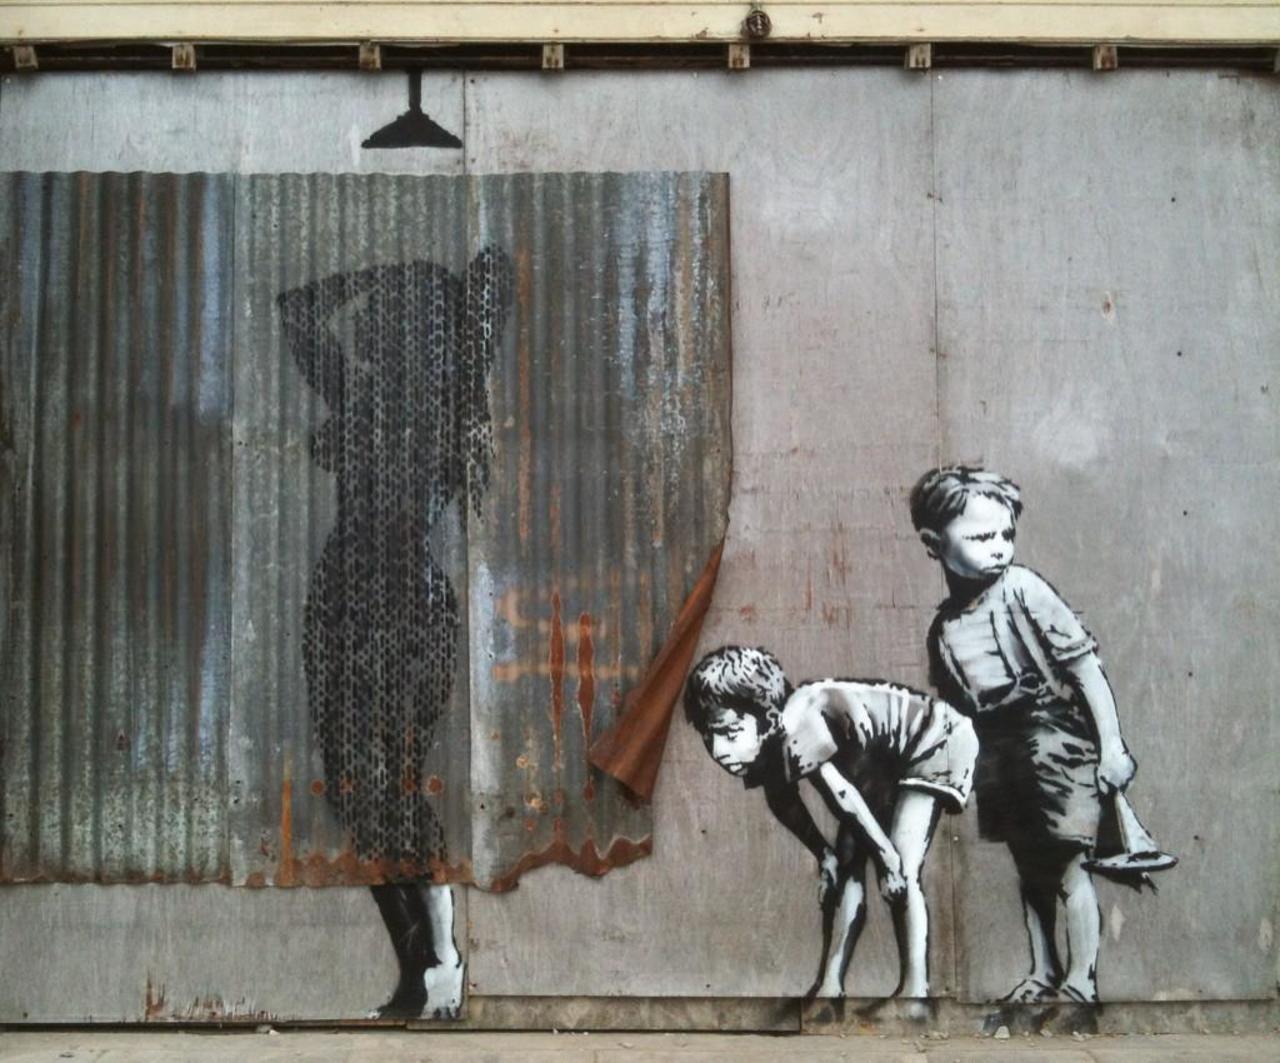 #Banksy's #StreetArt #Graffiti #Artwork, at #Dismaland, #westonsupermare http://t.co/56z6KdS6ia